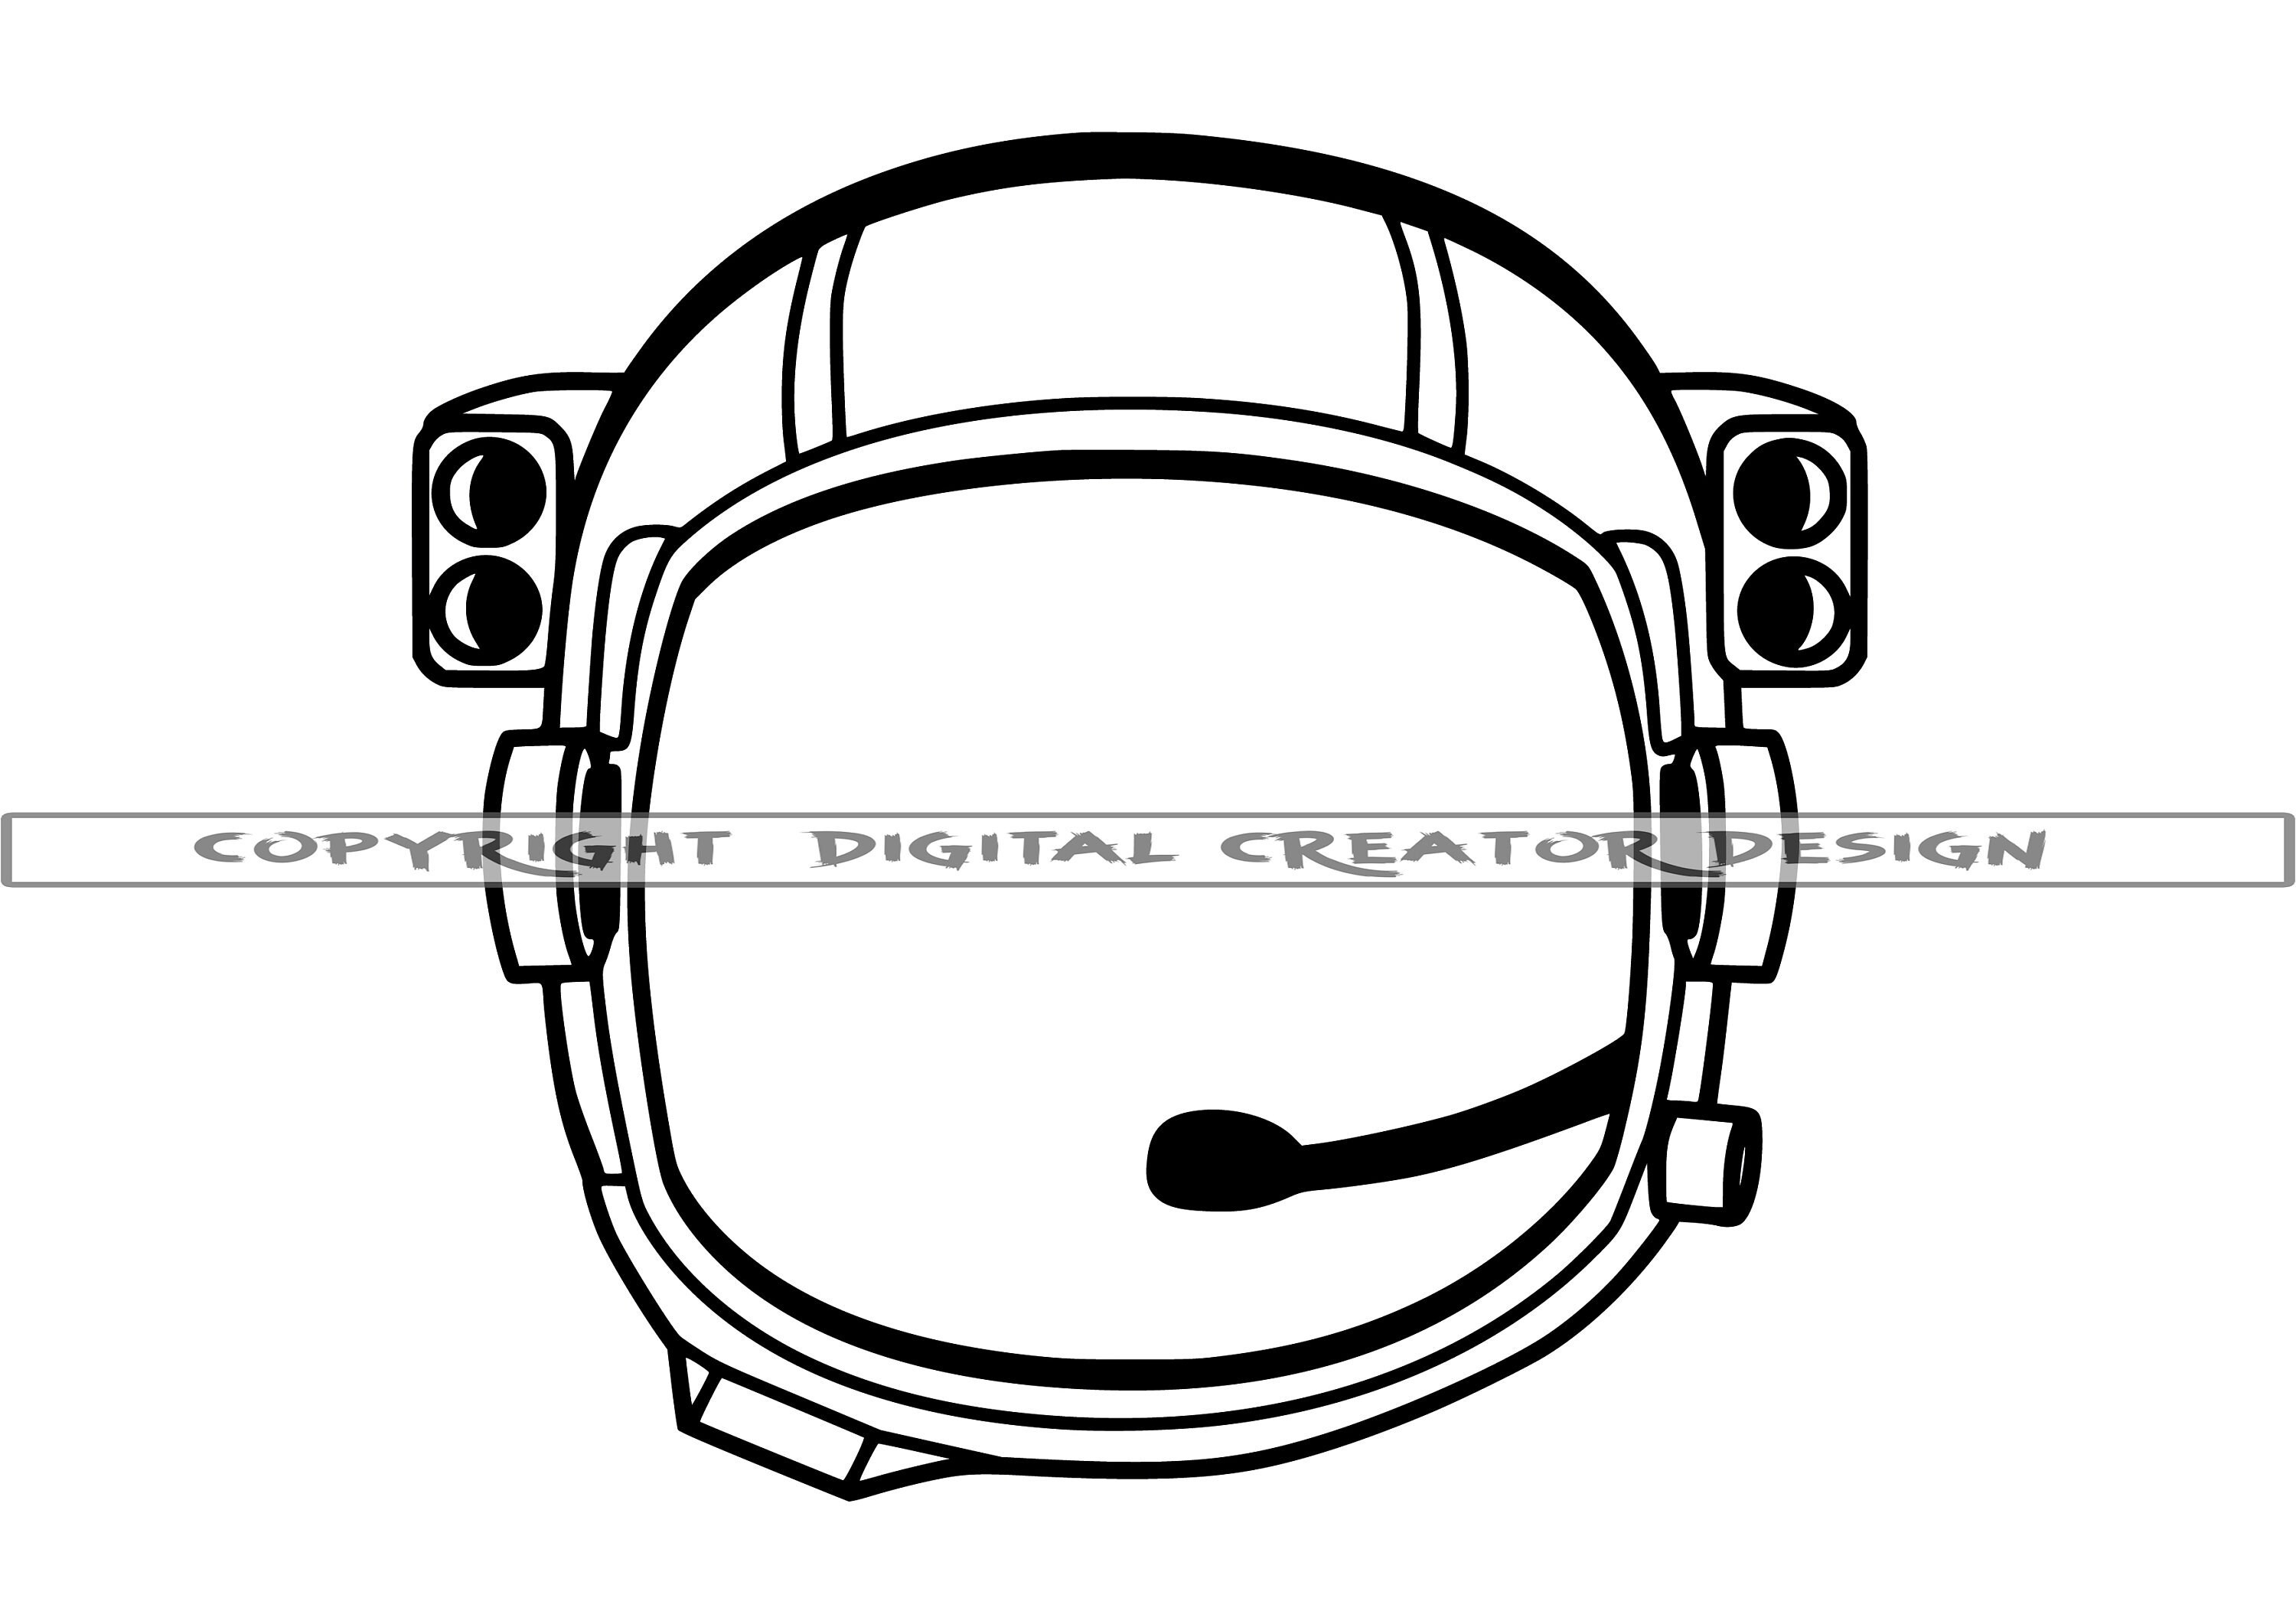 Astronaut Helmet Outline 2 SVG Astronaut Helmet SVG | Etsy